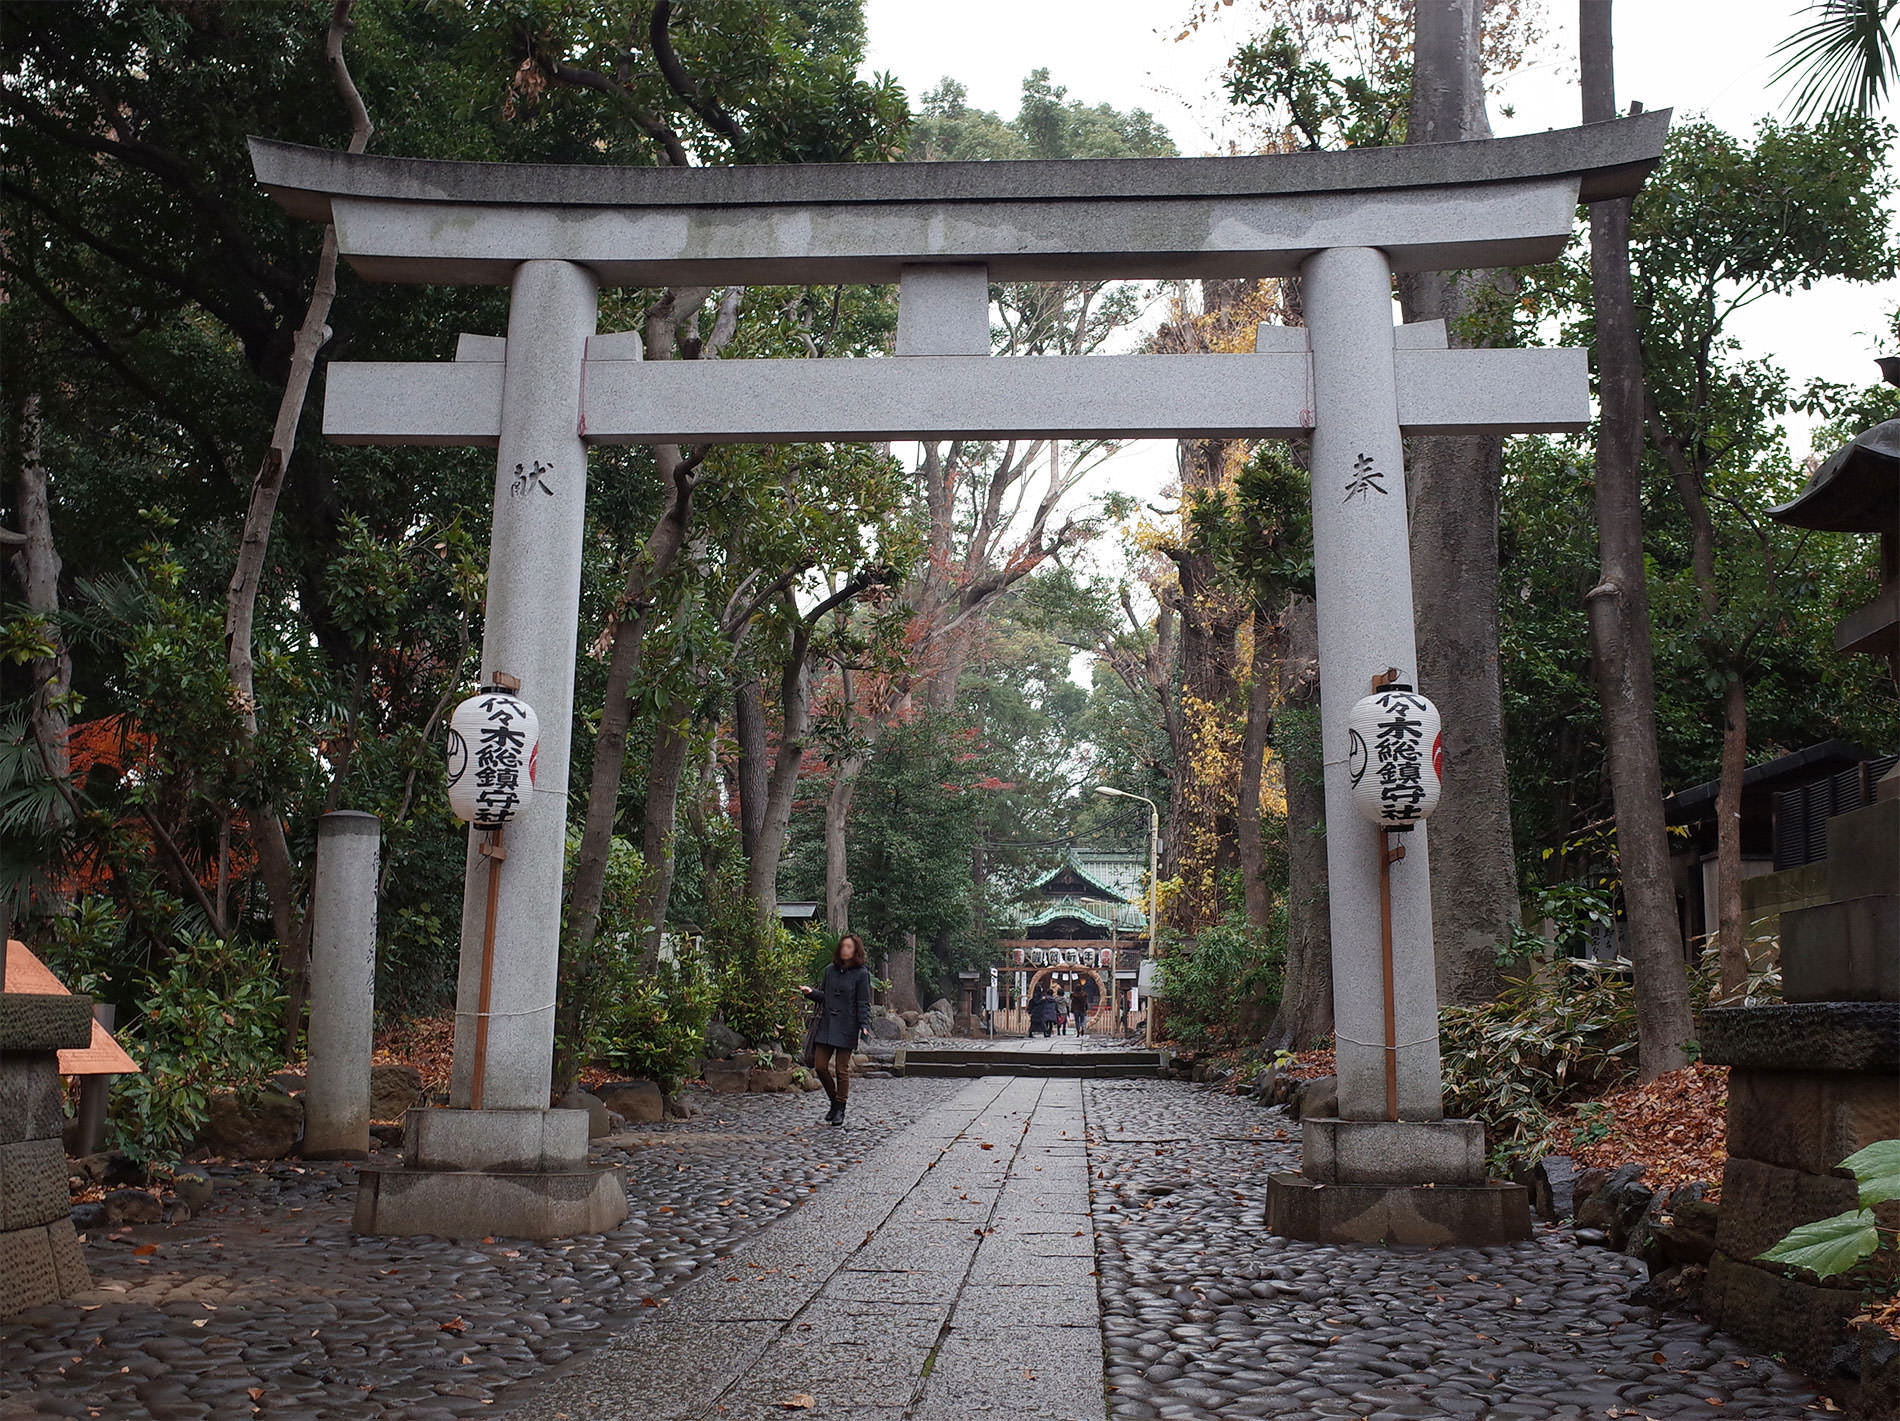 代々木八幡宮 | Visit to Yoyogi Hachiman shrine 2019